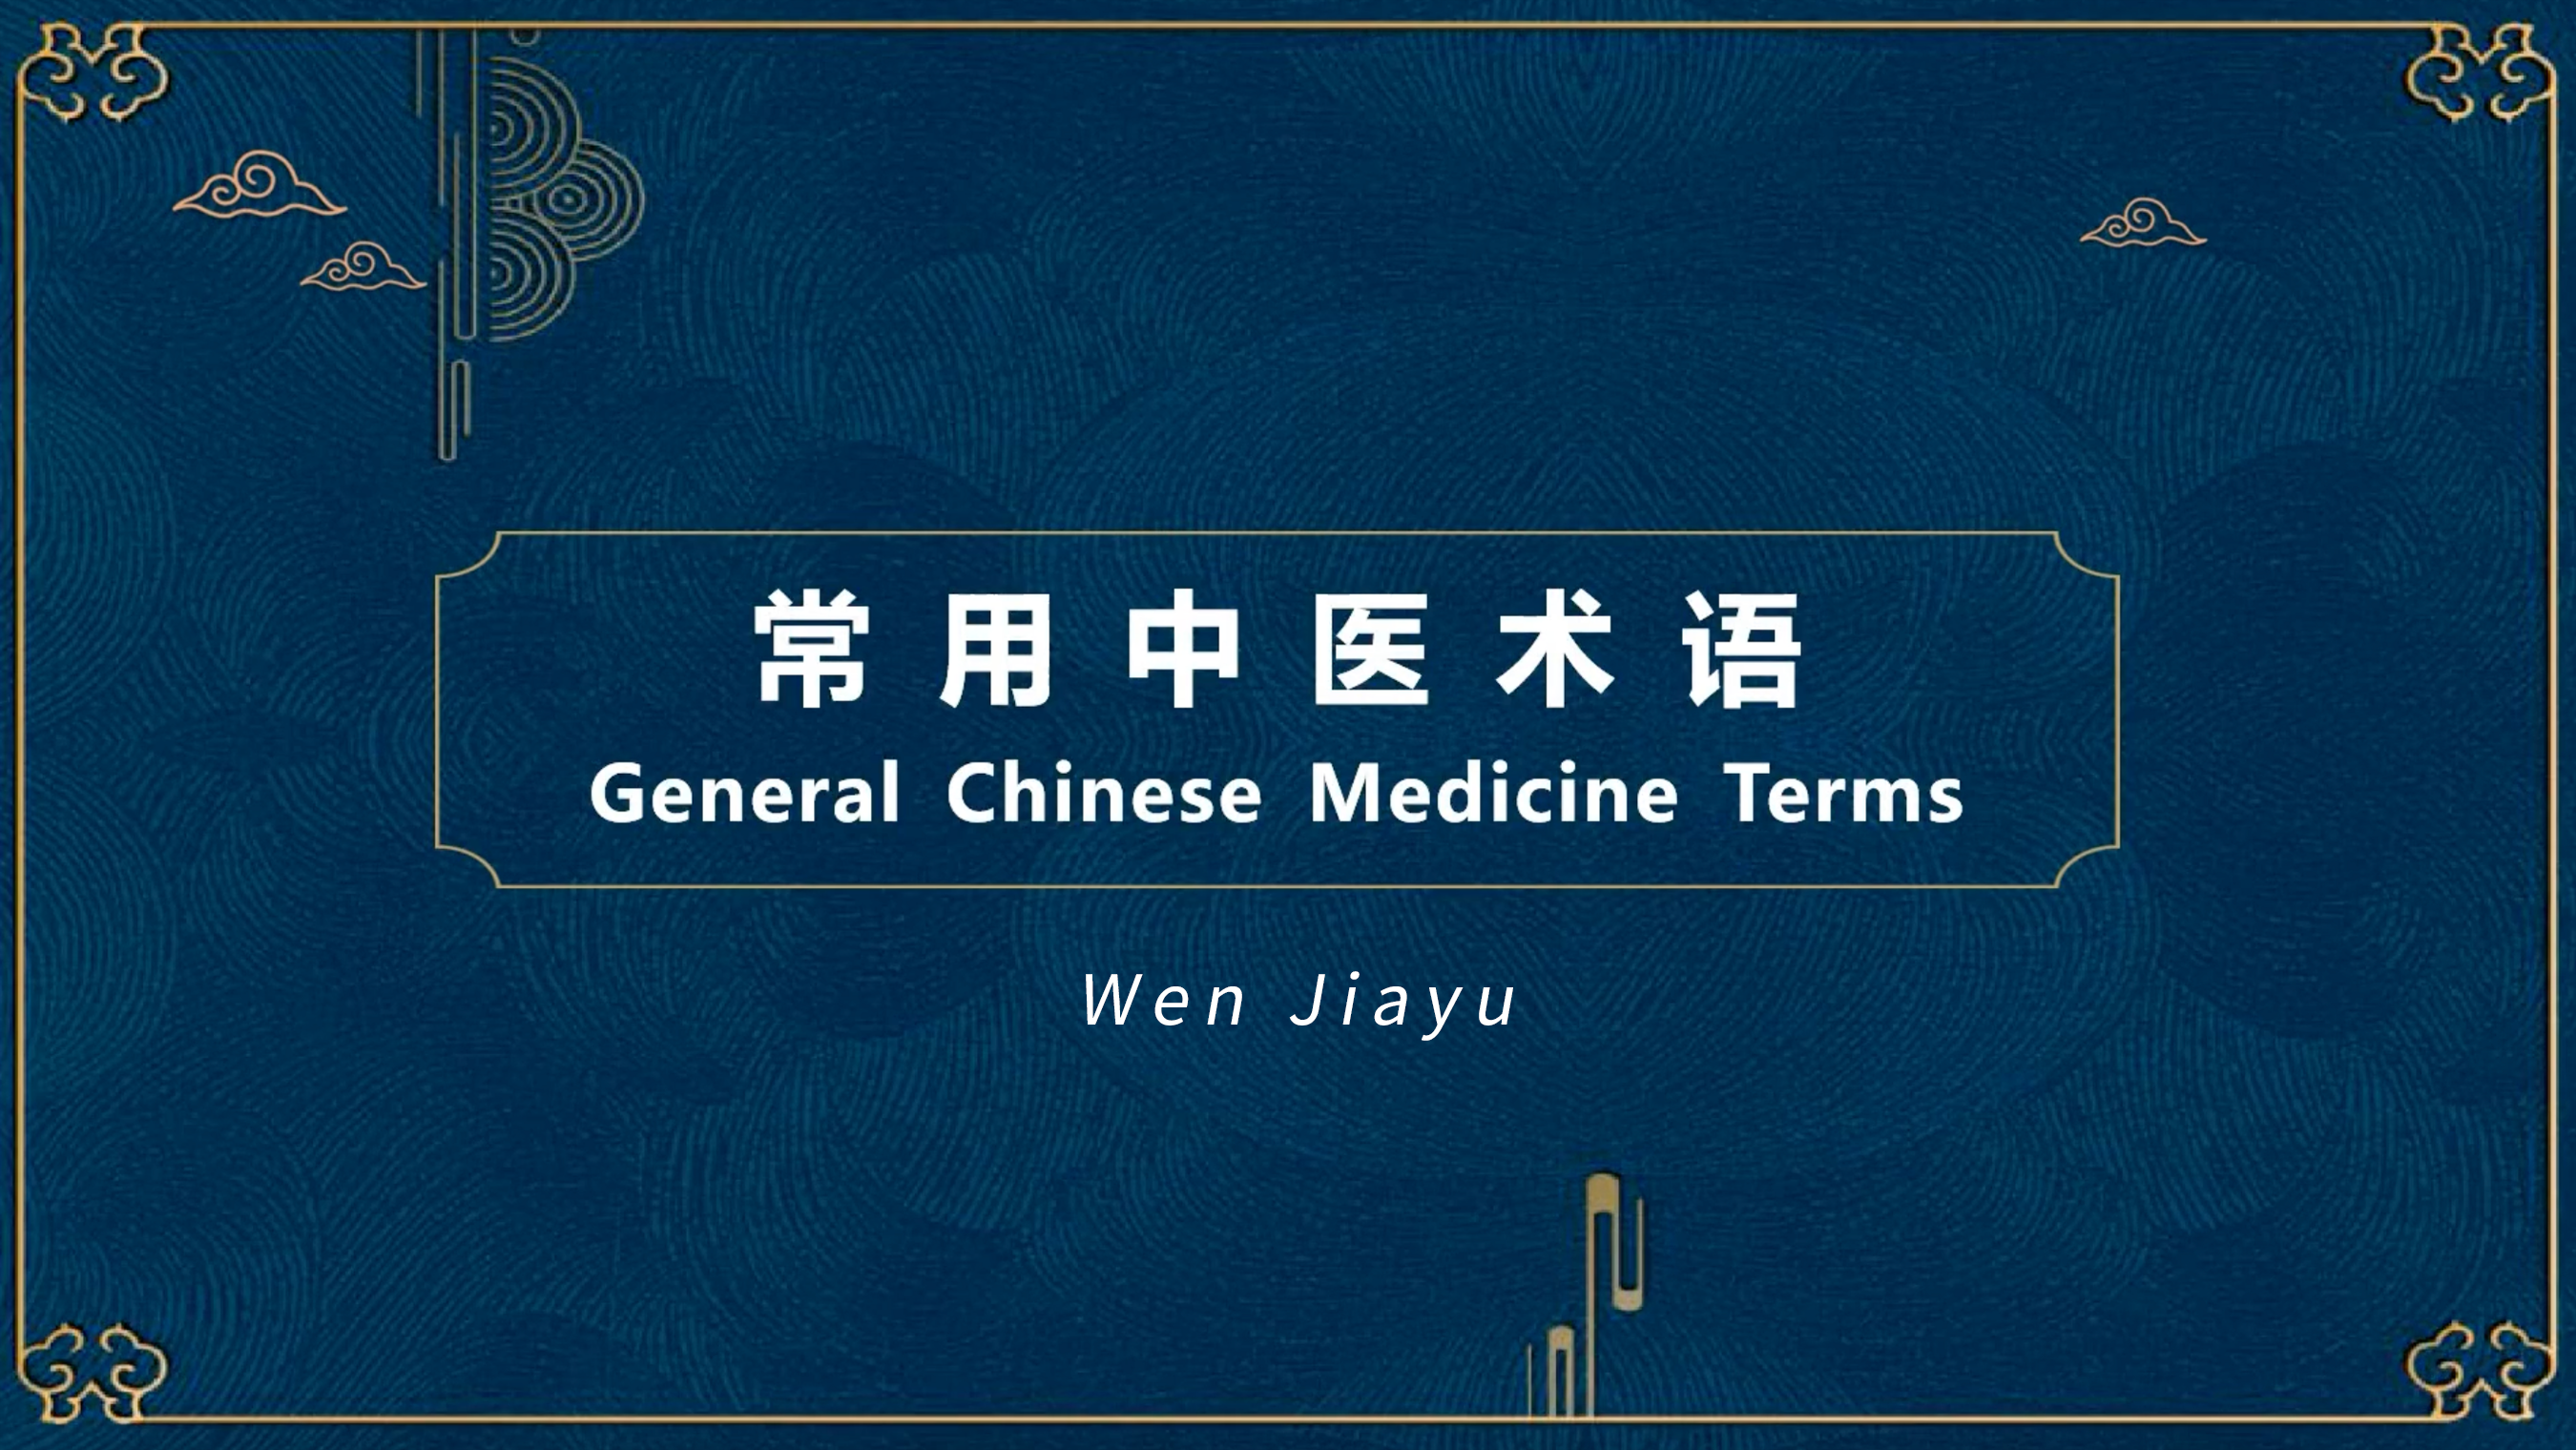 General Chinese Medicine Terms-Wen Jiayu